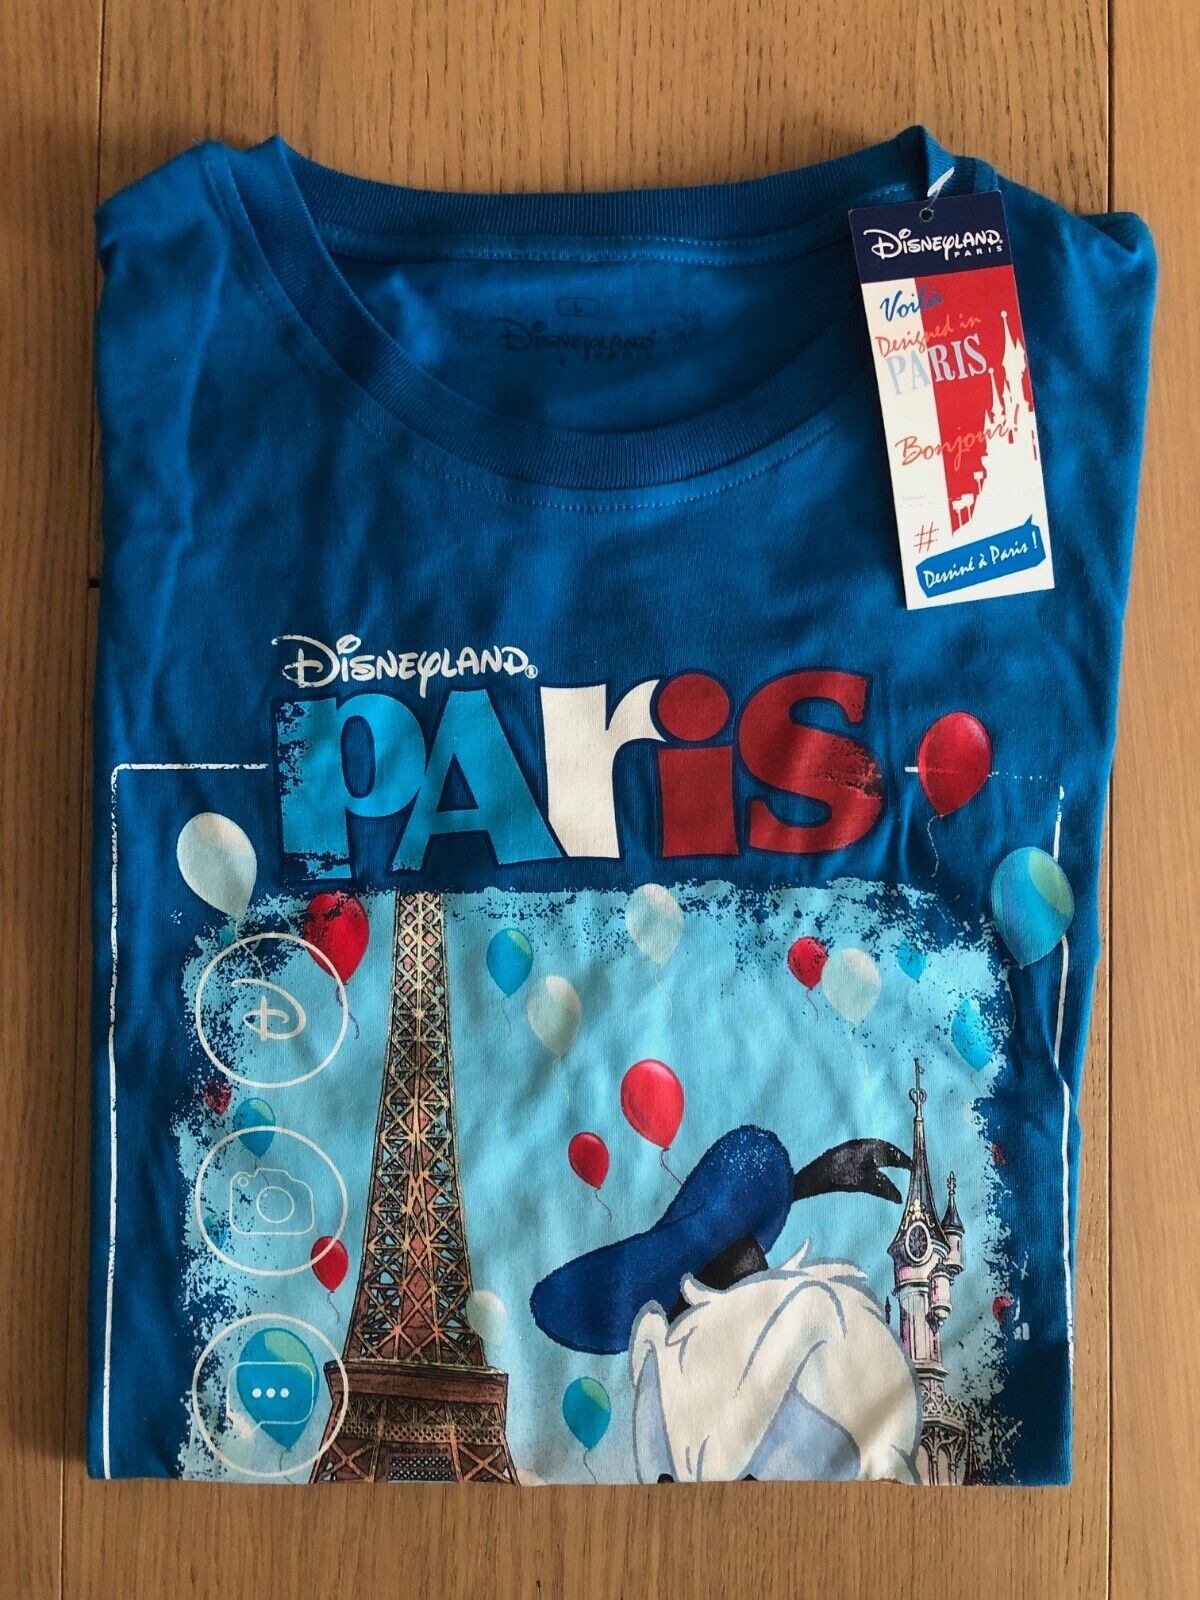 Disneyland Paris Donald Duck Cotton Blue Short Sleeve T-Shirt Large New w/ Tag